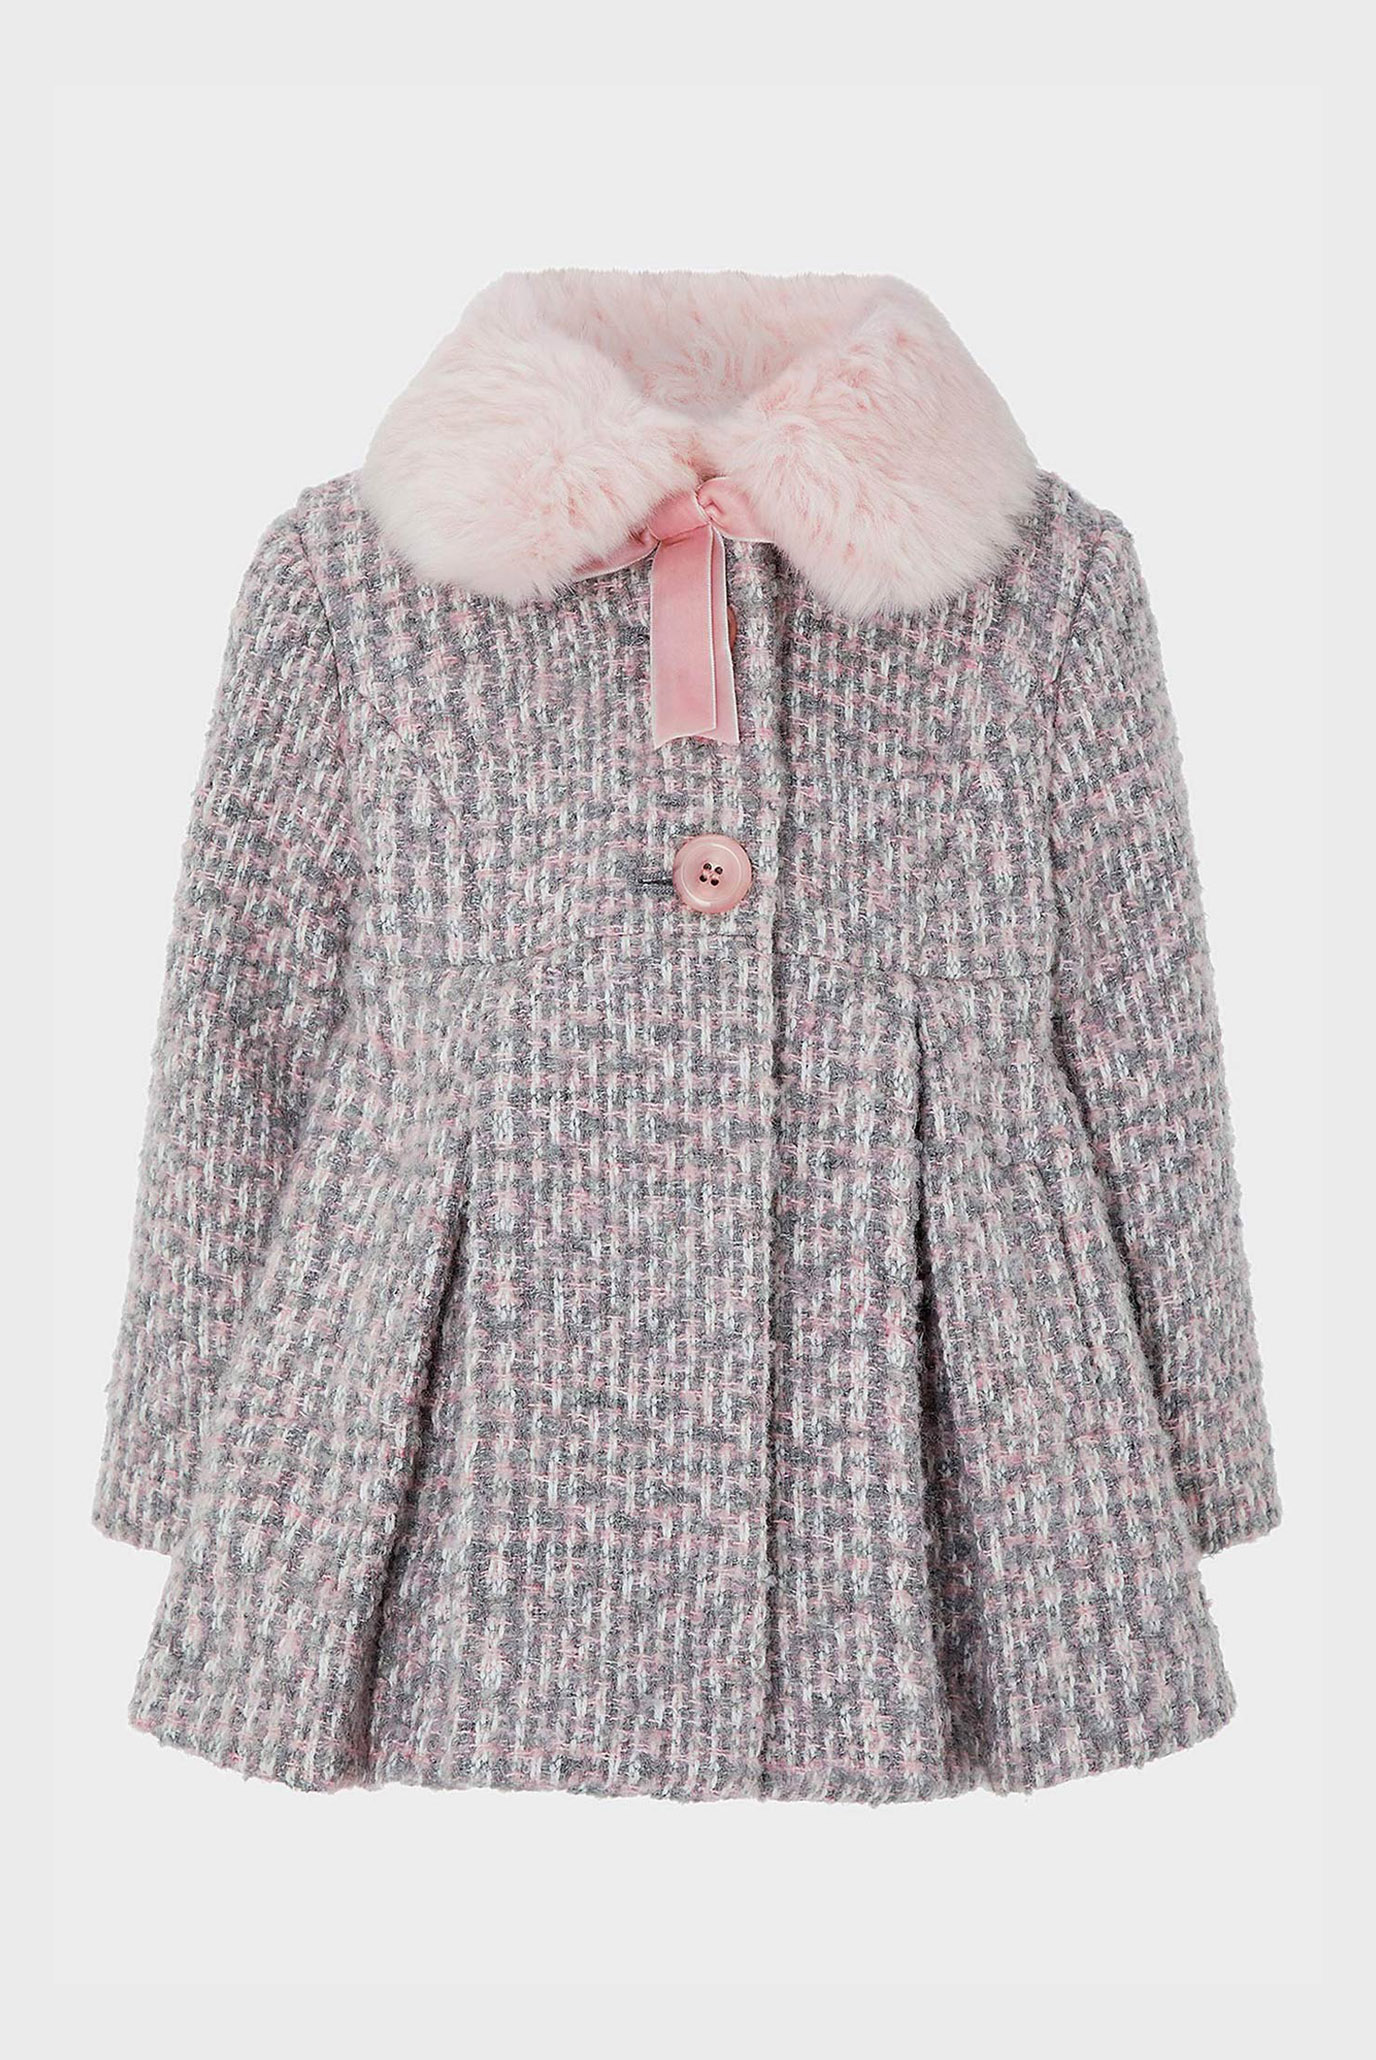 Детское розовое пальто BABY TESSIE TWEED 1